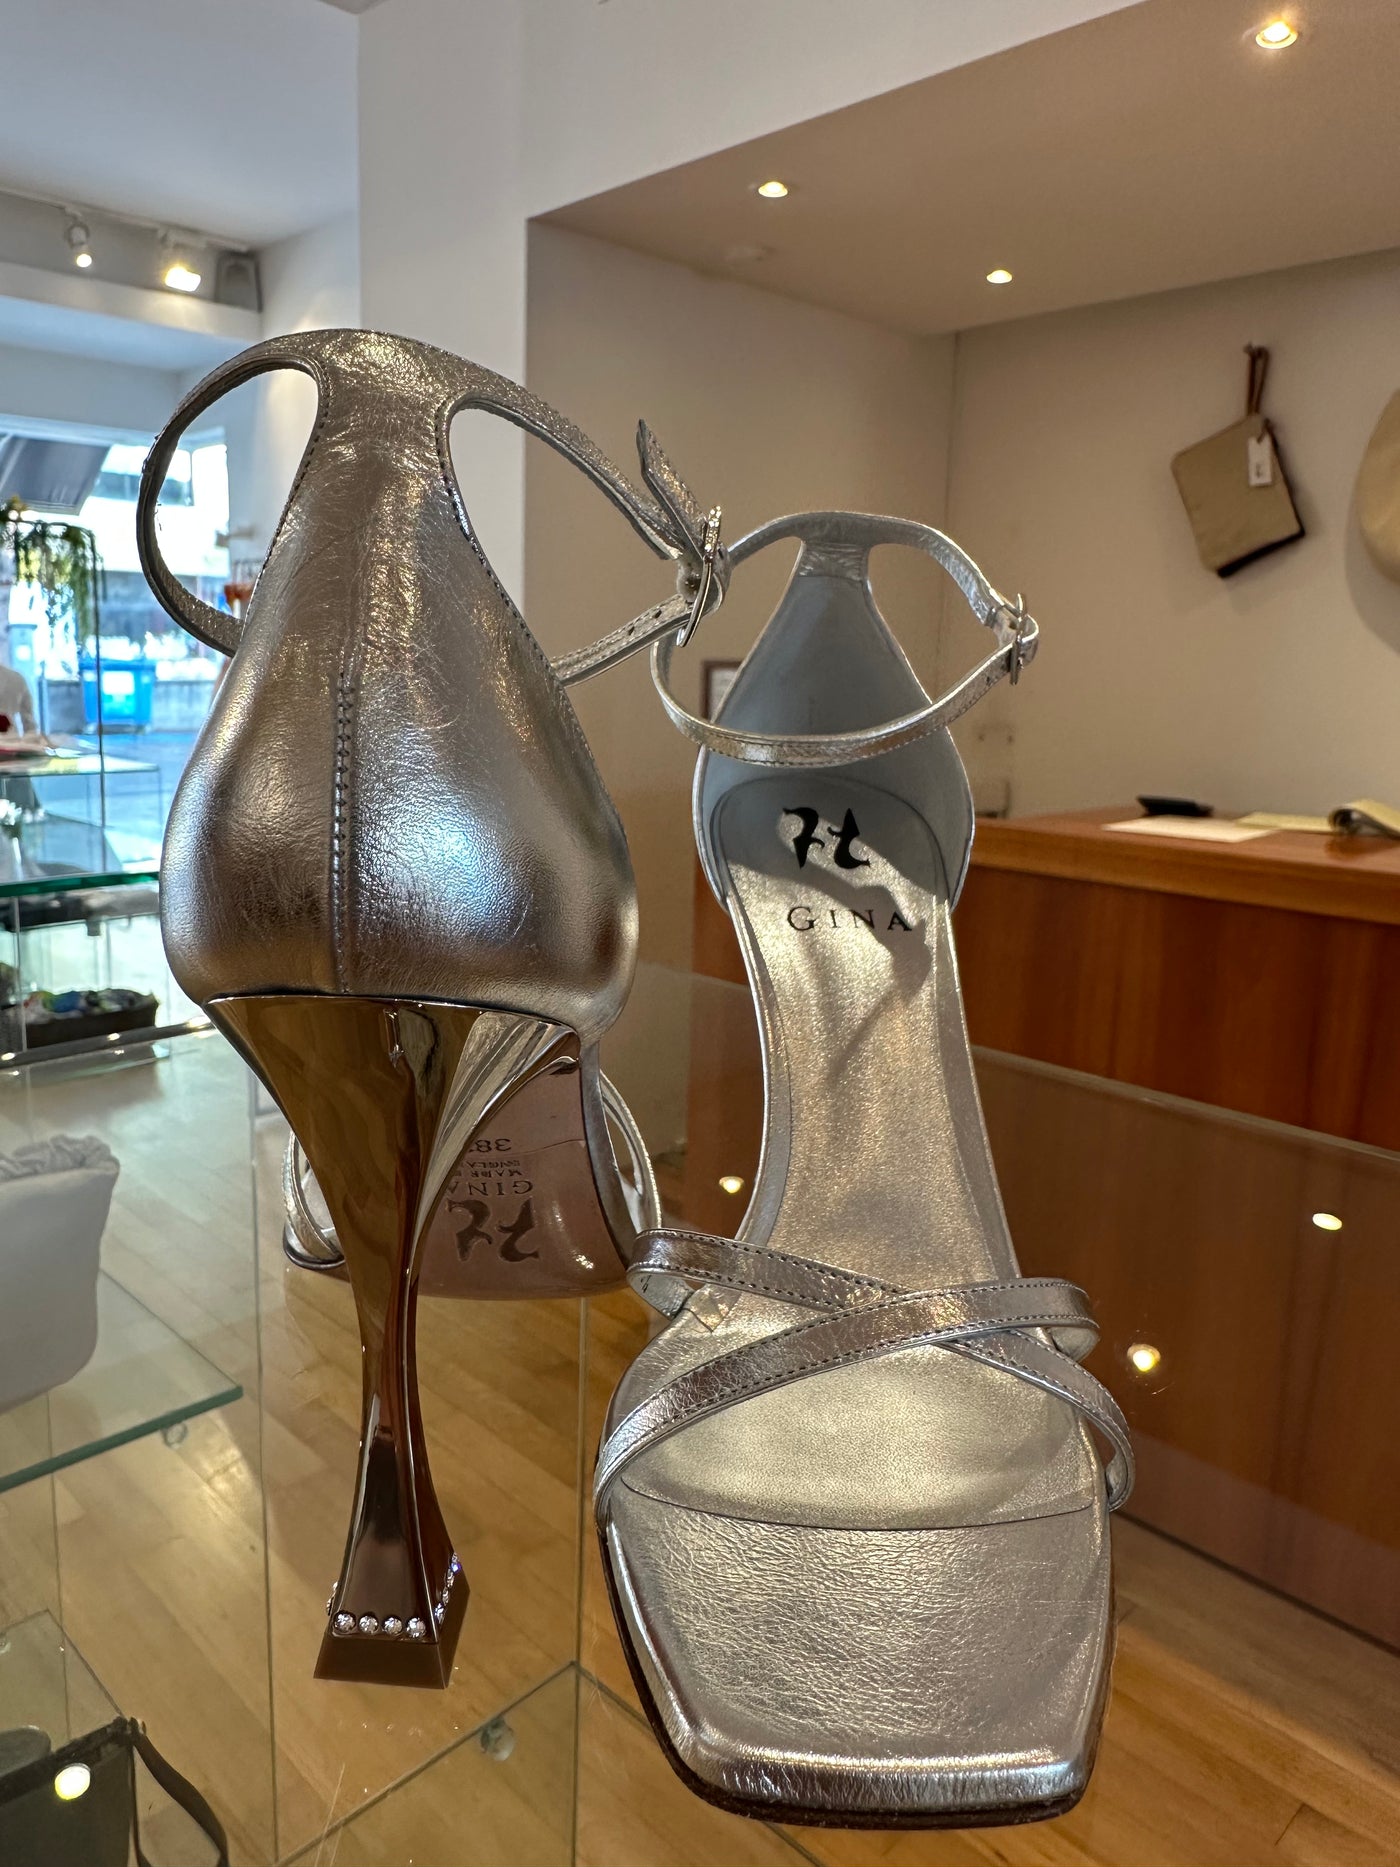 Gina Rocher silver high heel